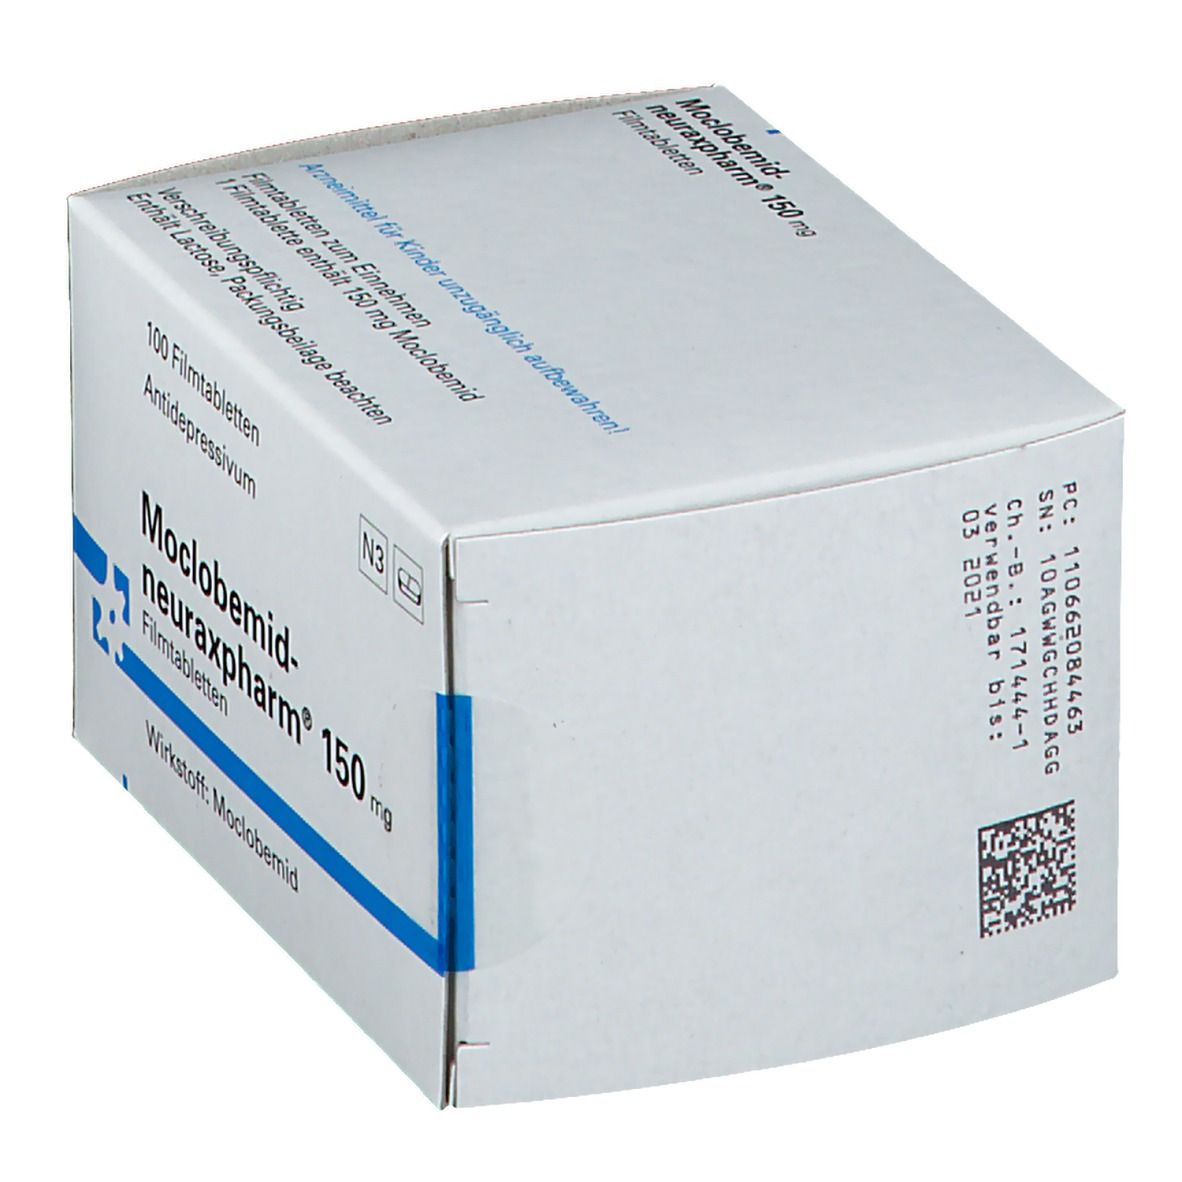 Moclobemid-neuraxpharm® 150 mg